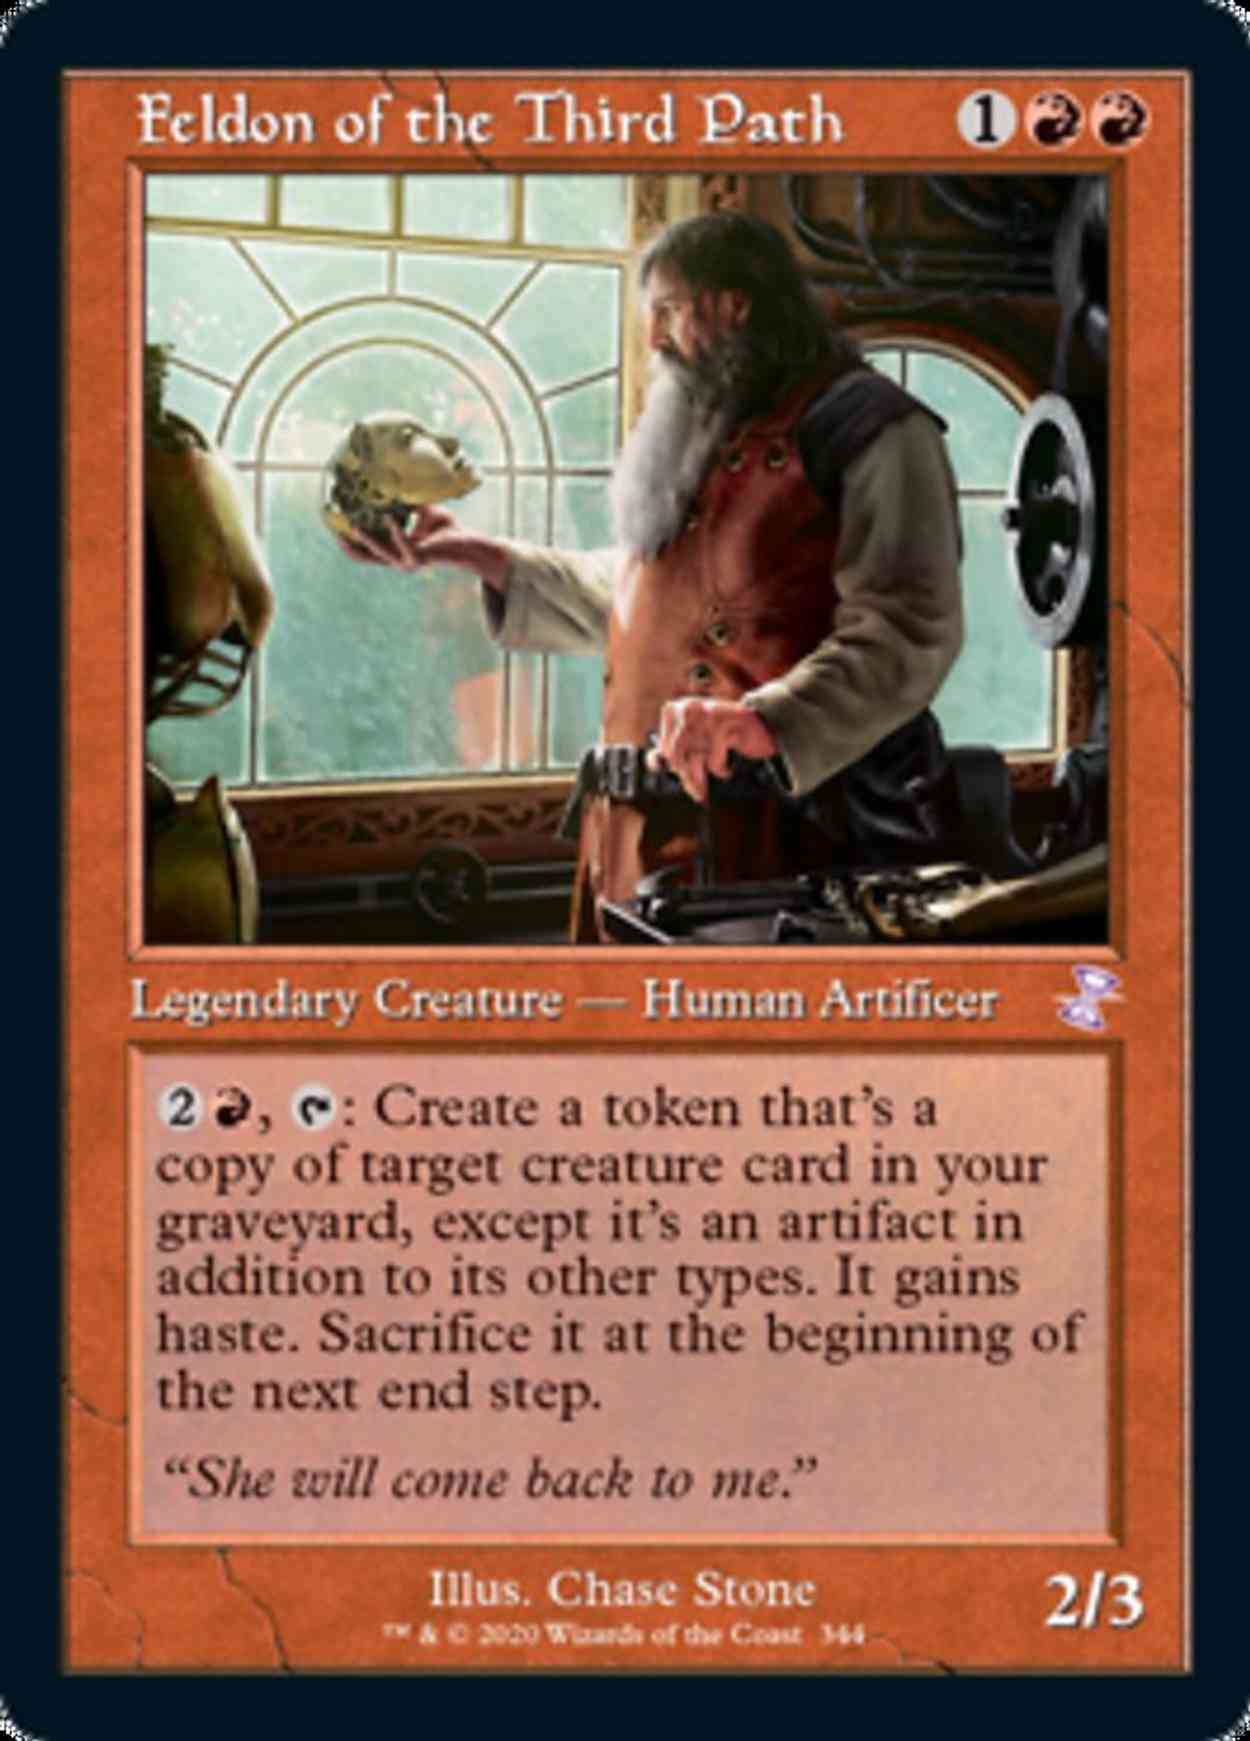 Feldon of the Third Path magic card front